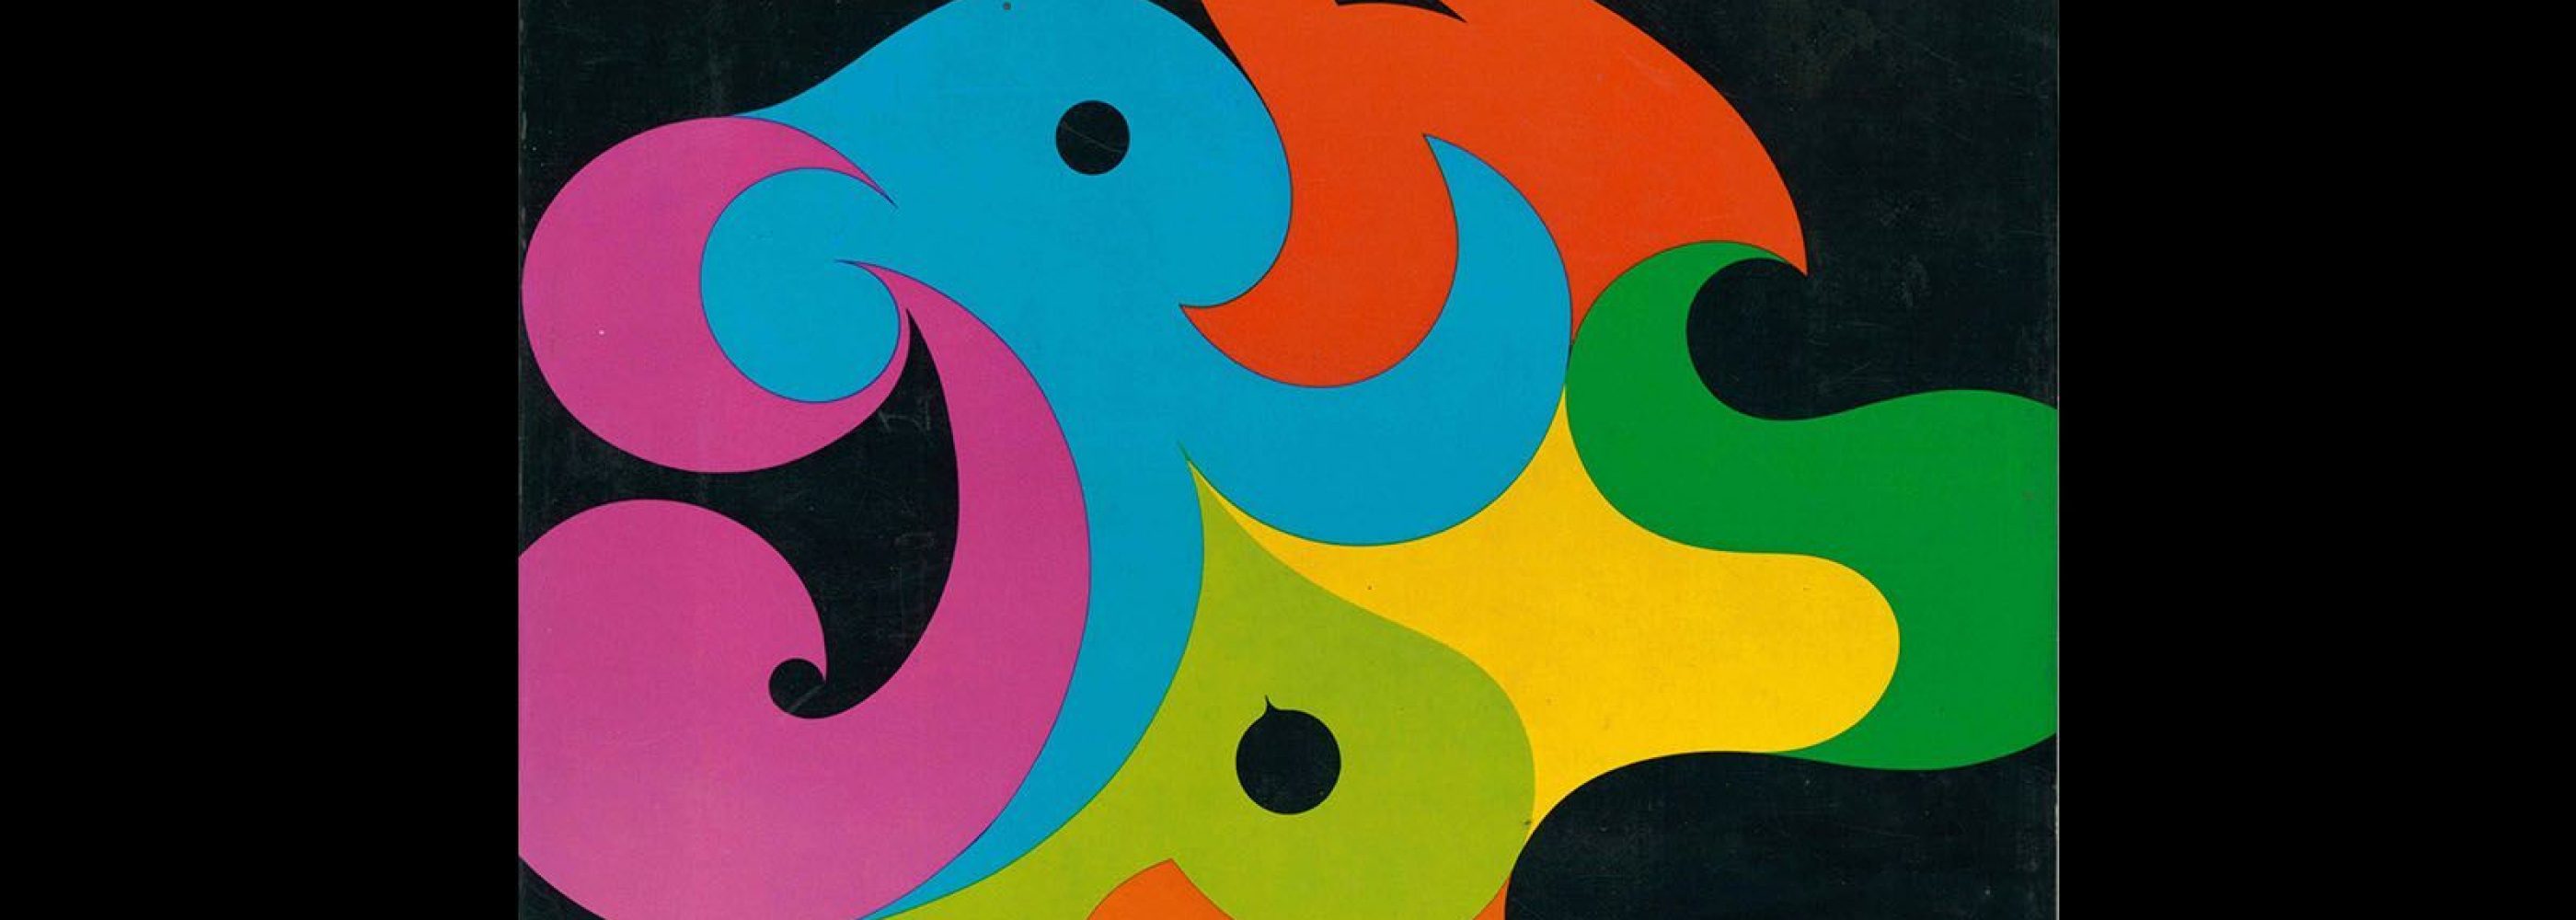 Graphis 148, 1970. Cover design by Fritz Gottschalk.